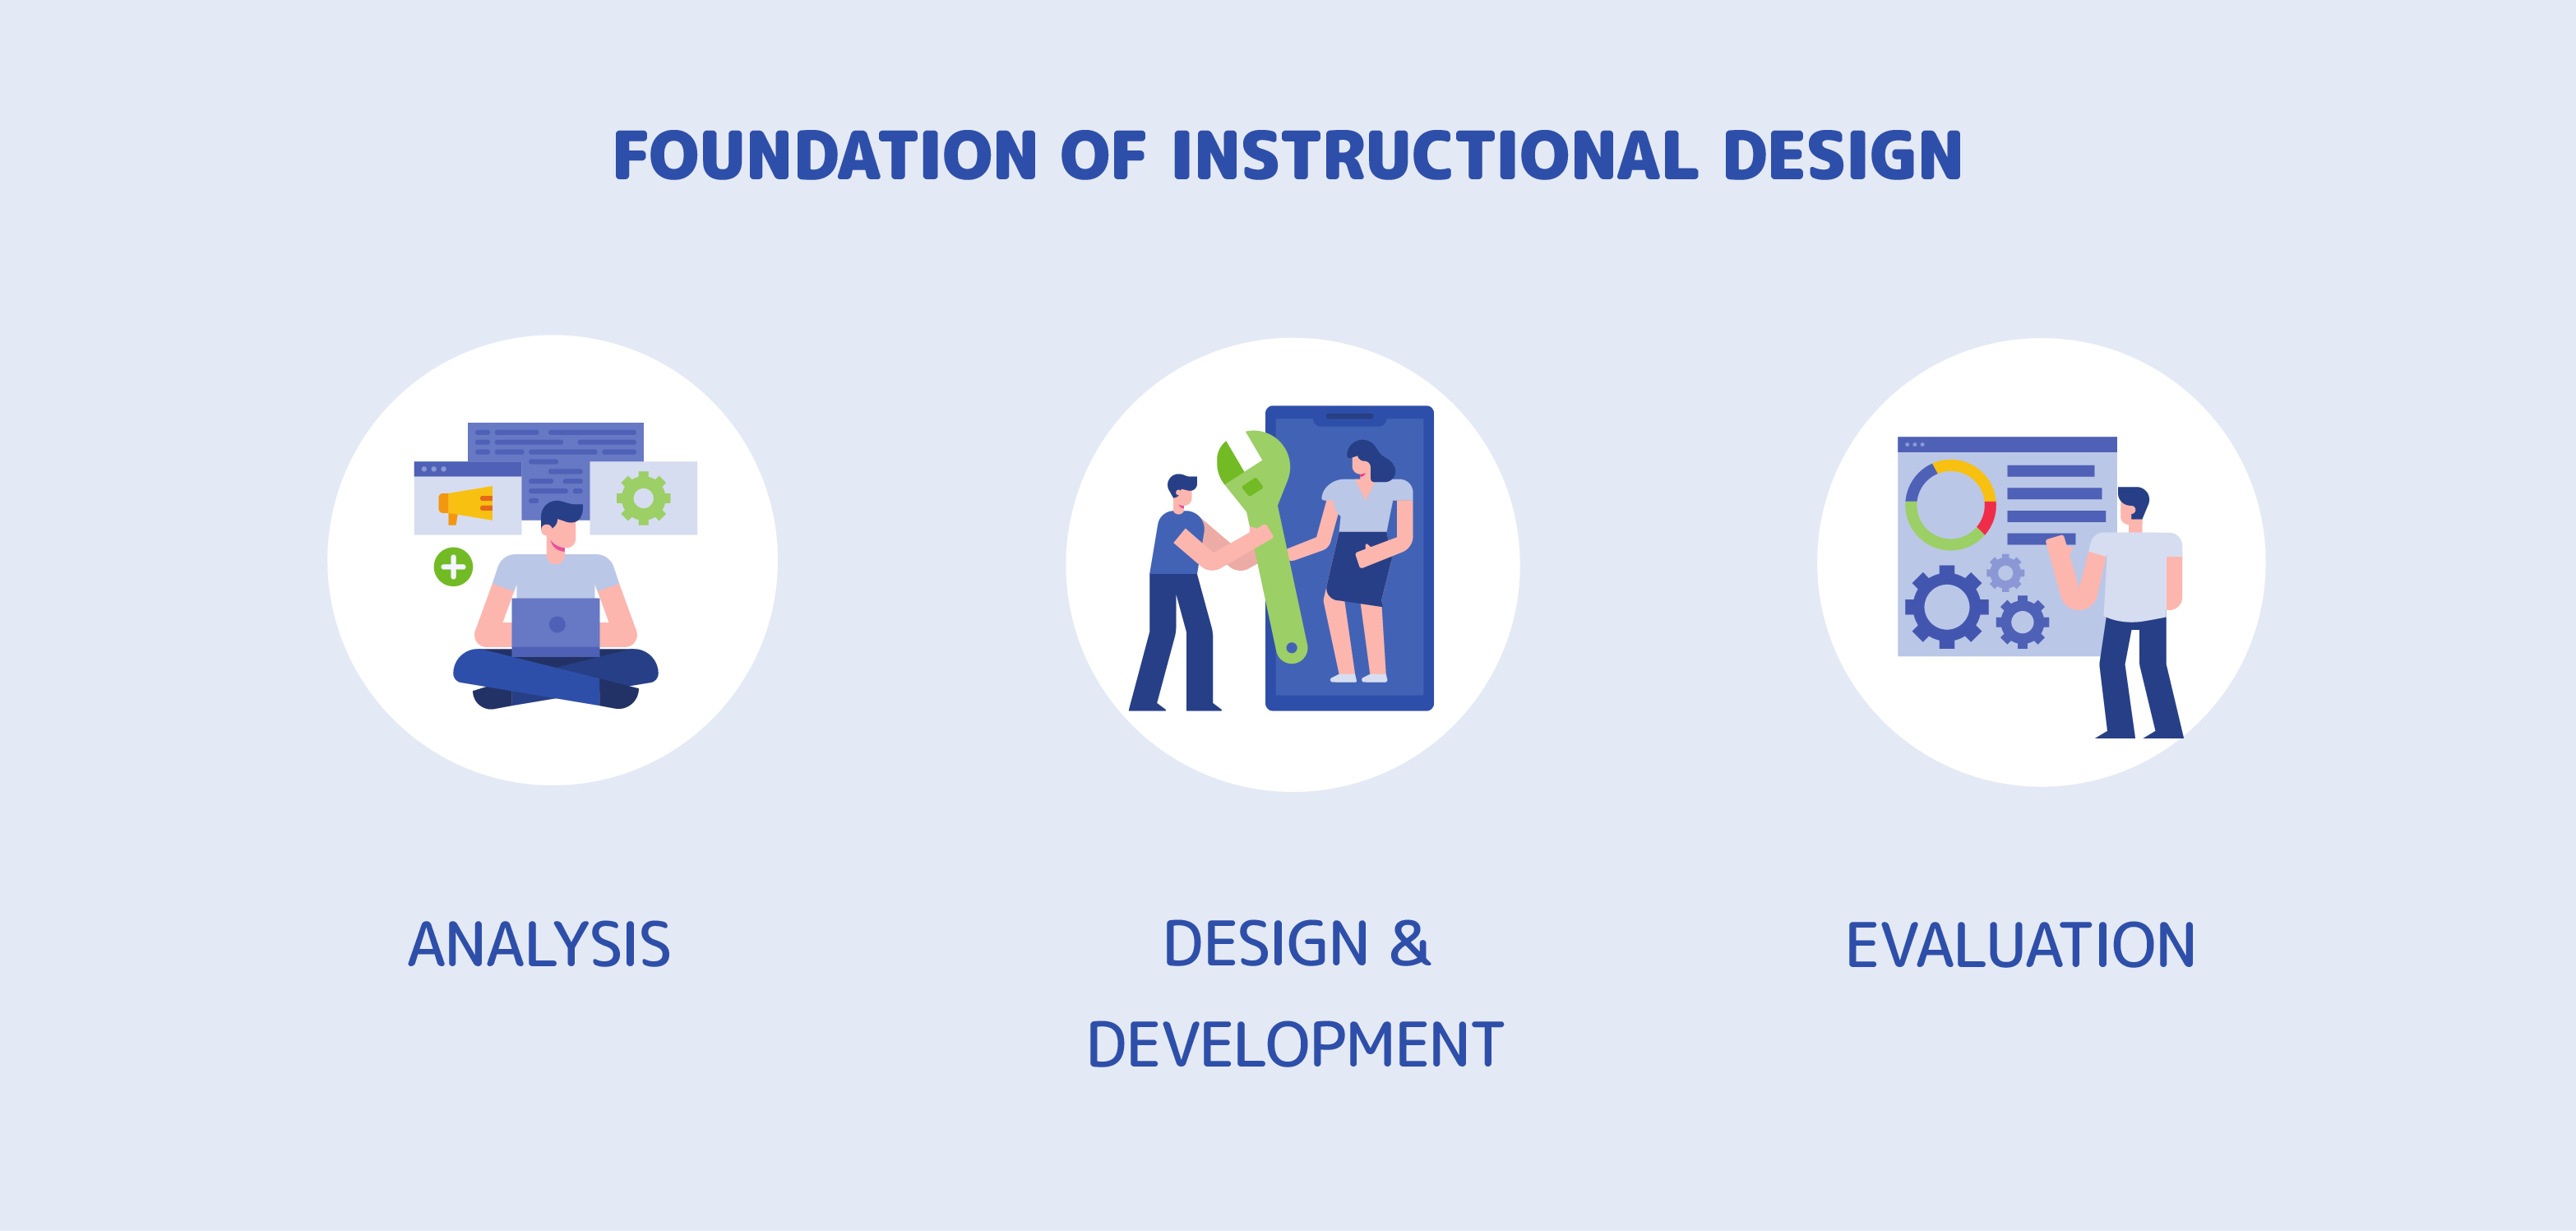 Five Instructional Design Principles